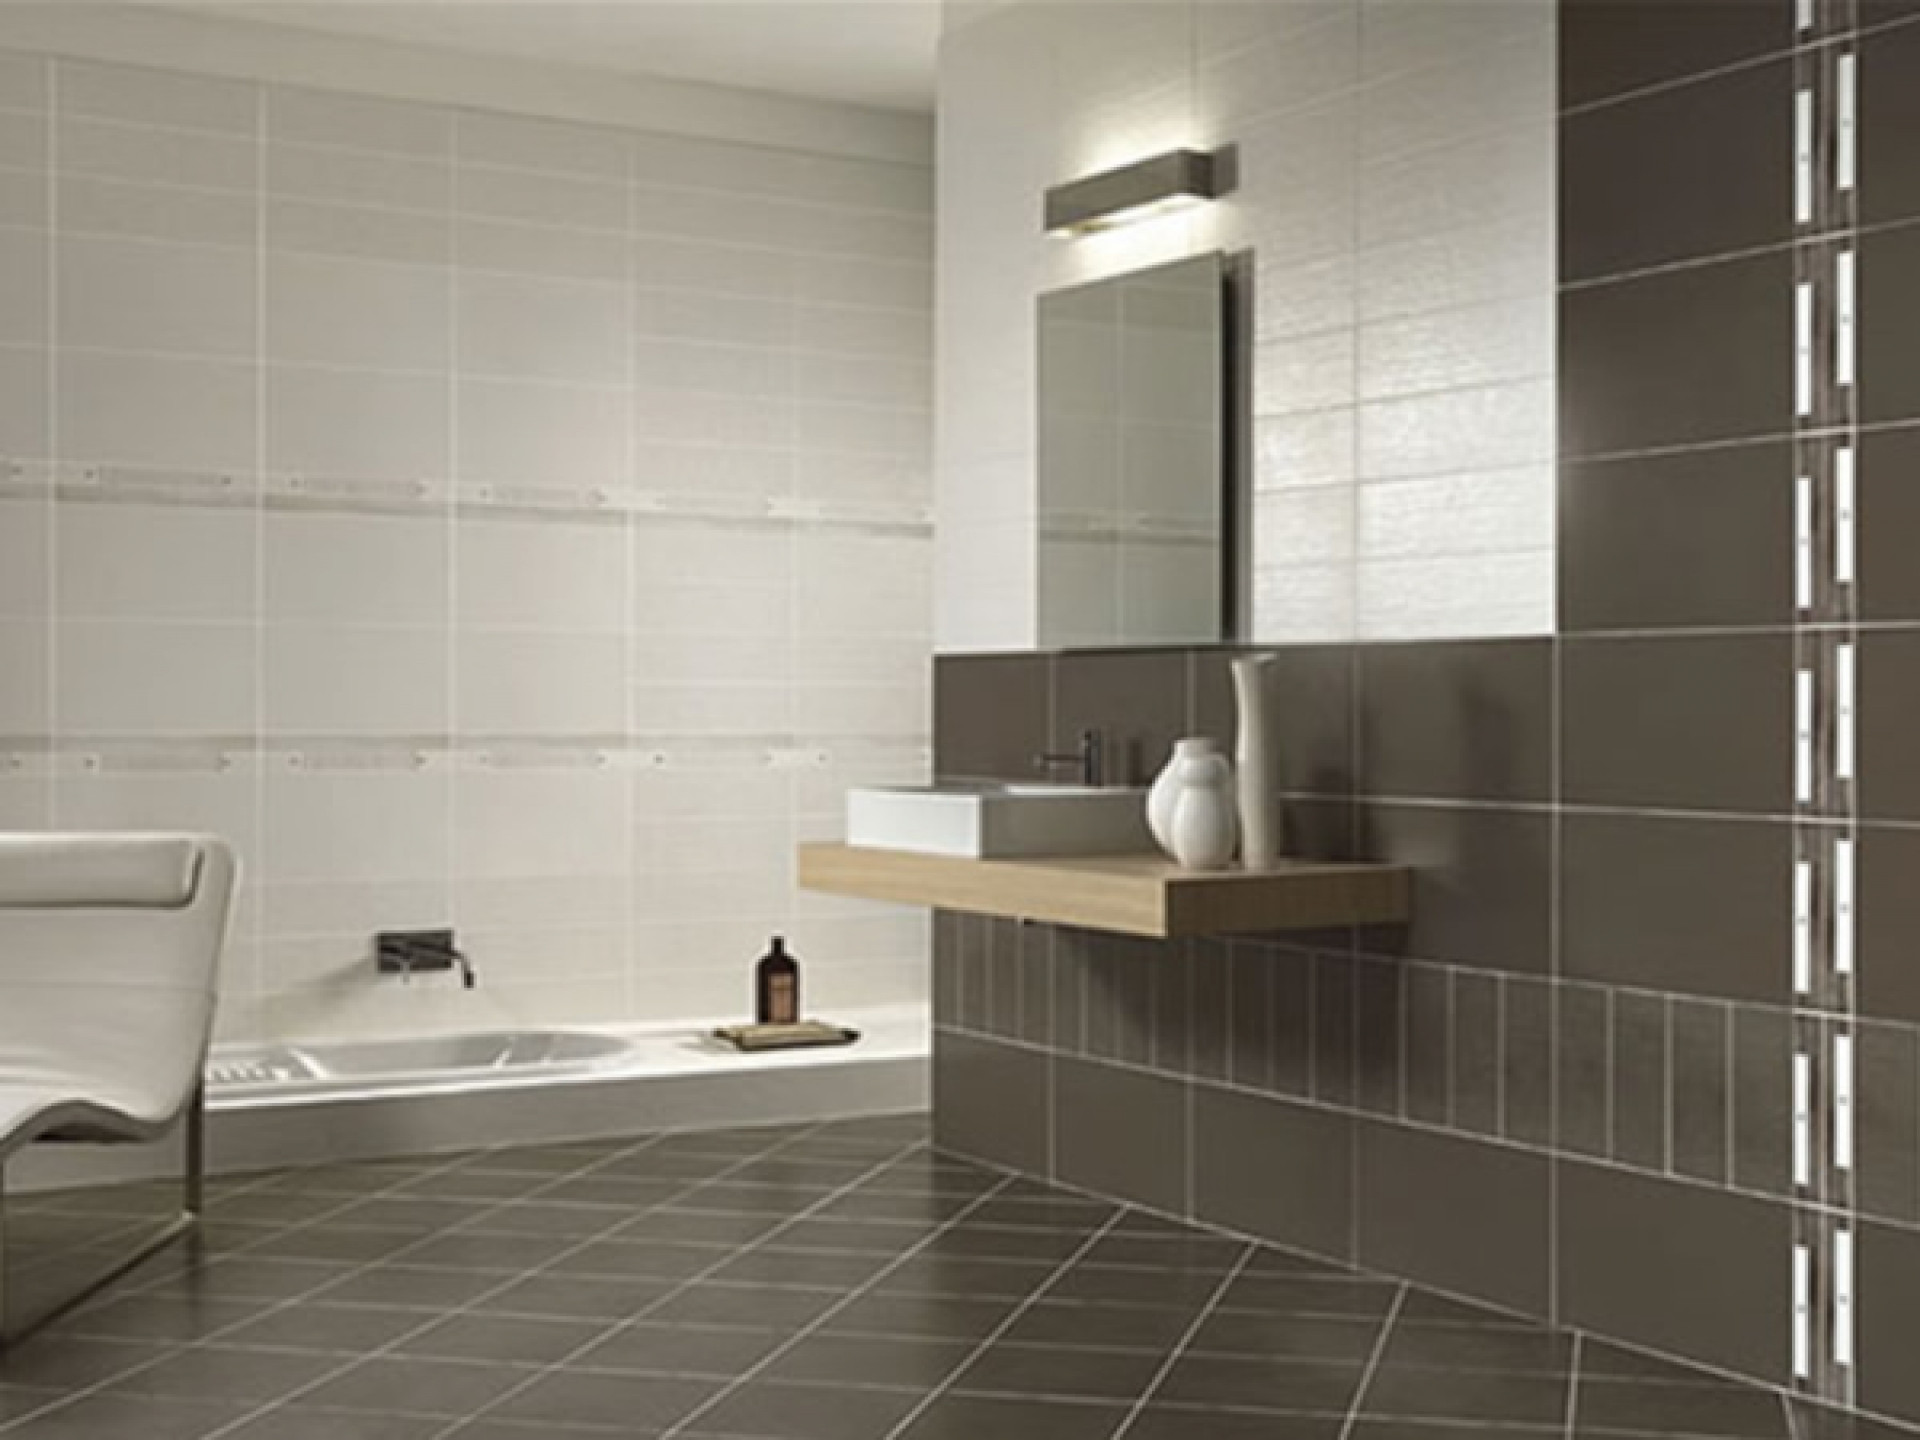 Bathroom Tile Styles
 30 amazing pictures decorative bathroom tile designs ideas